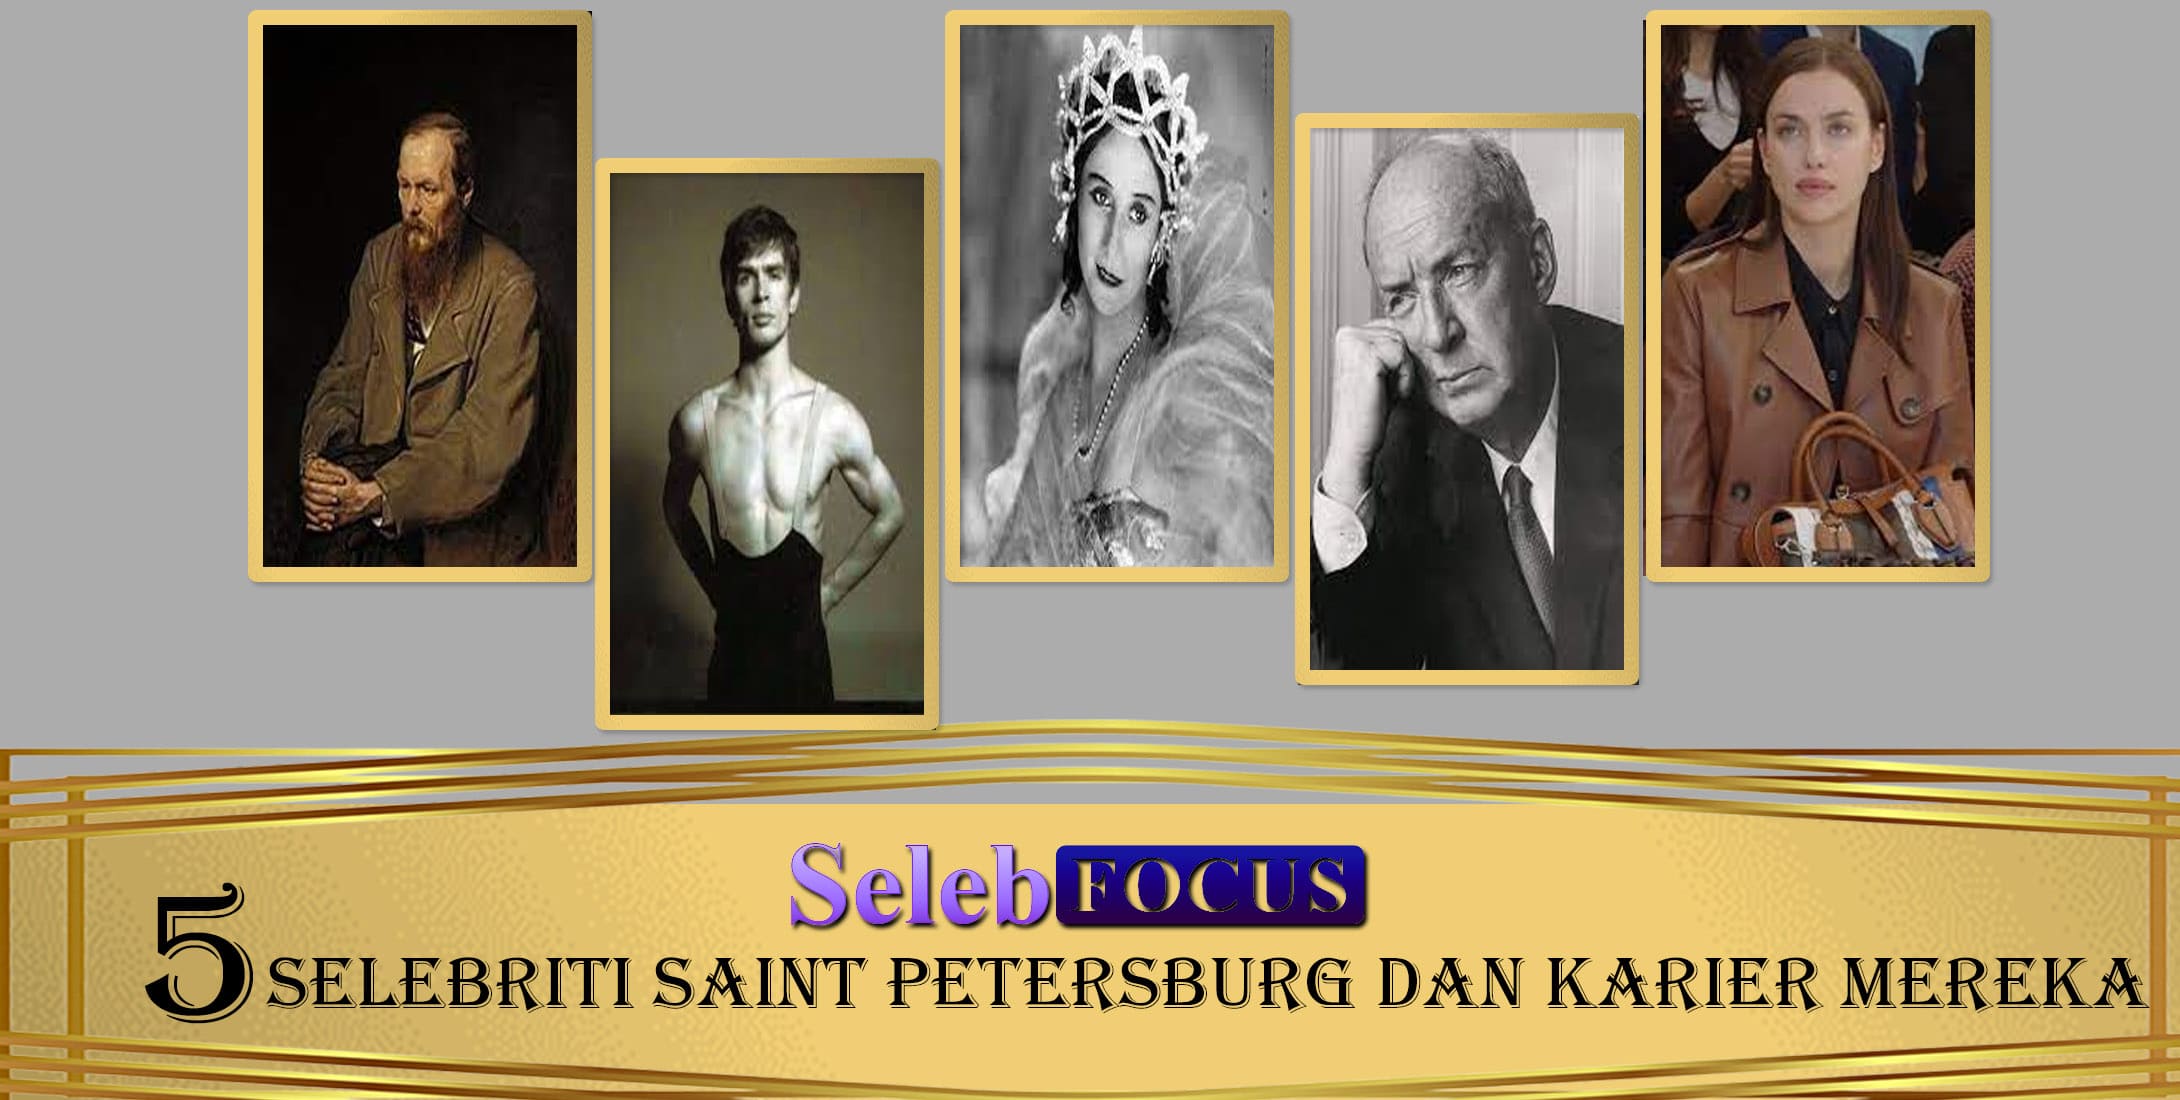 5 Selebriti Saint Petersburg